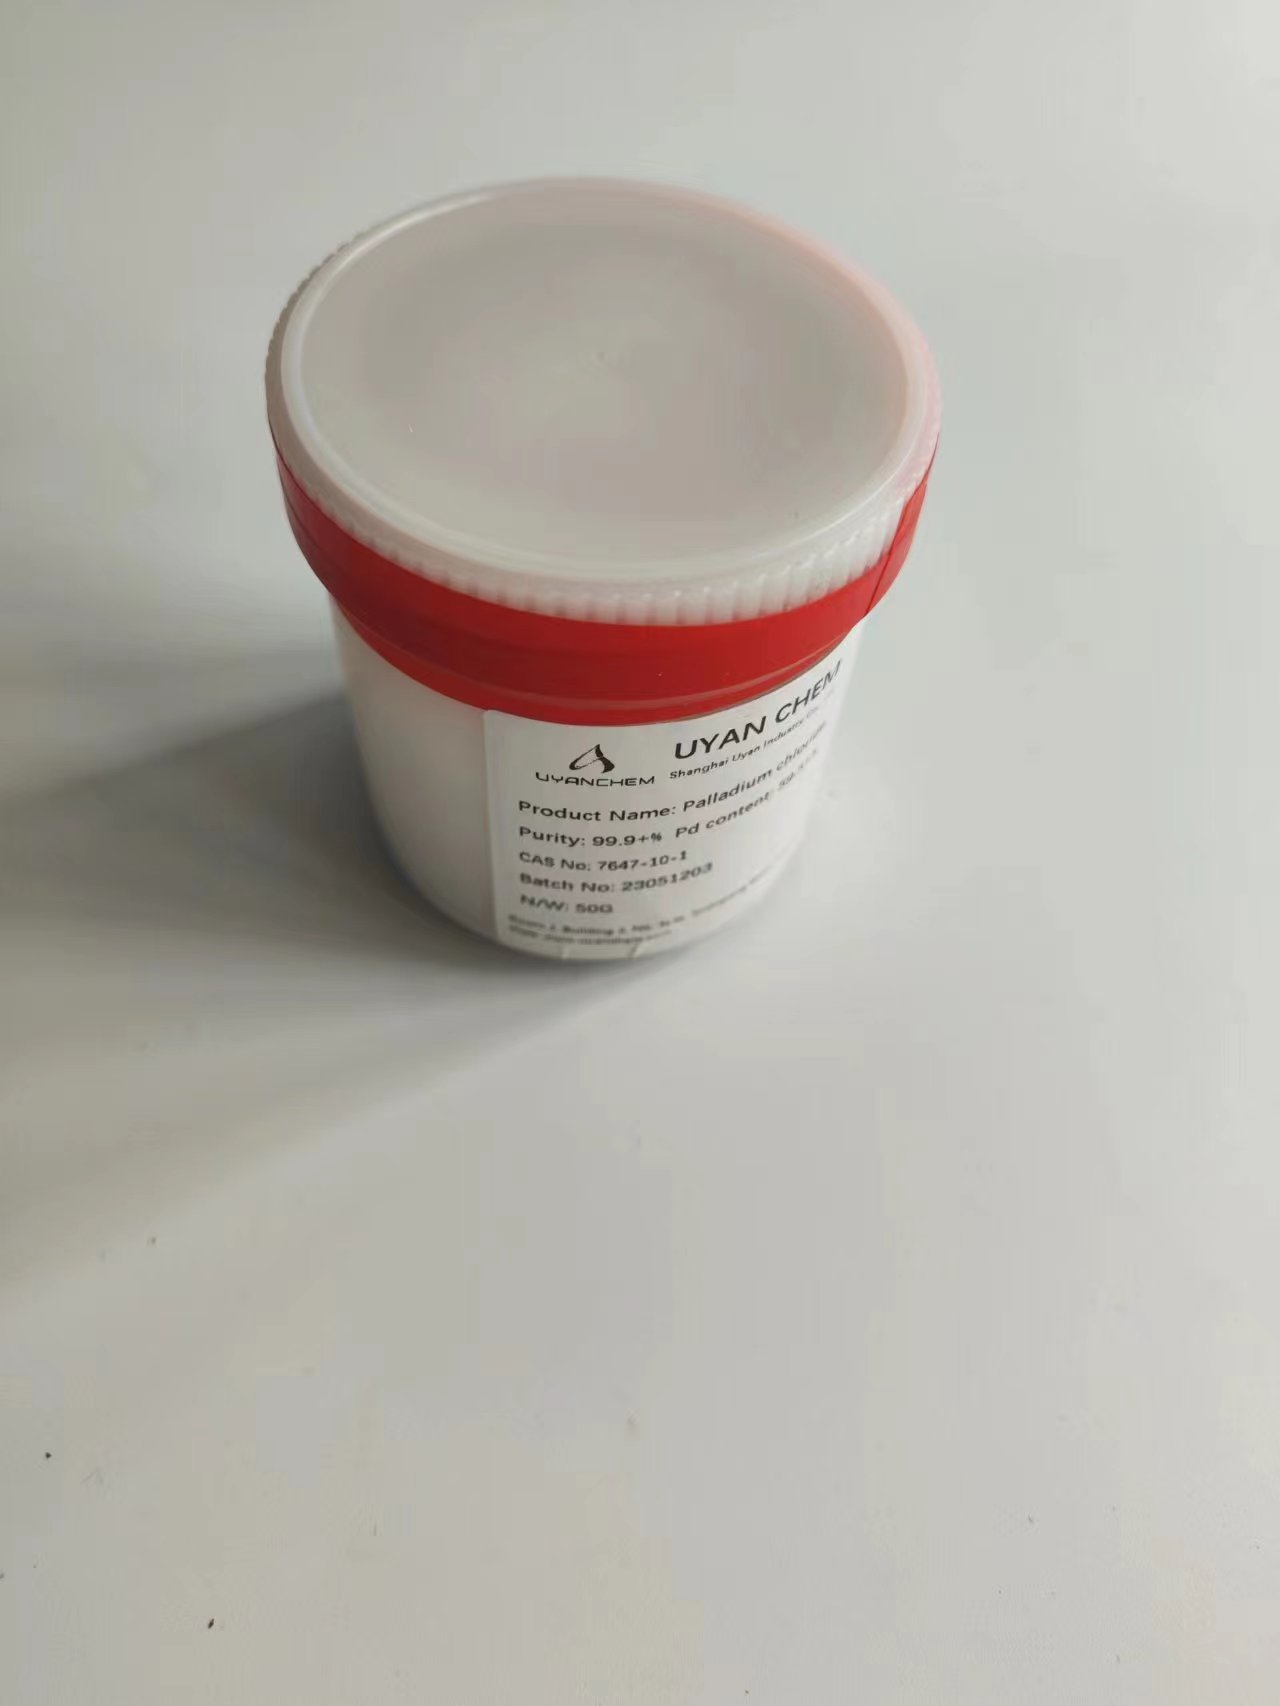 Palladium chloride CAS : 7647-10-1